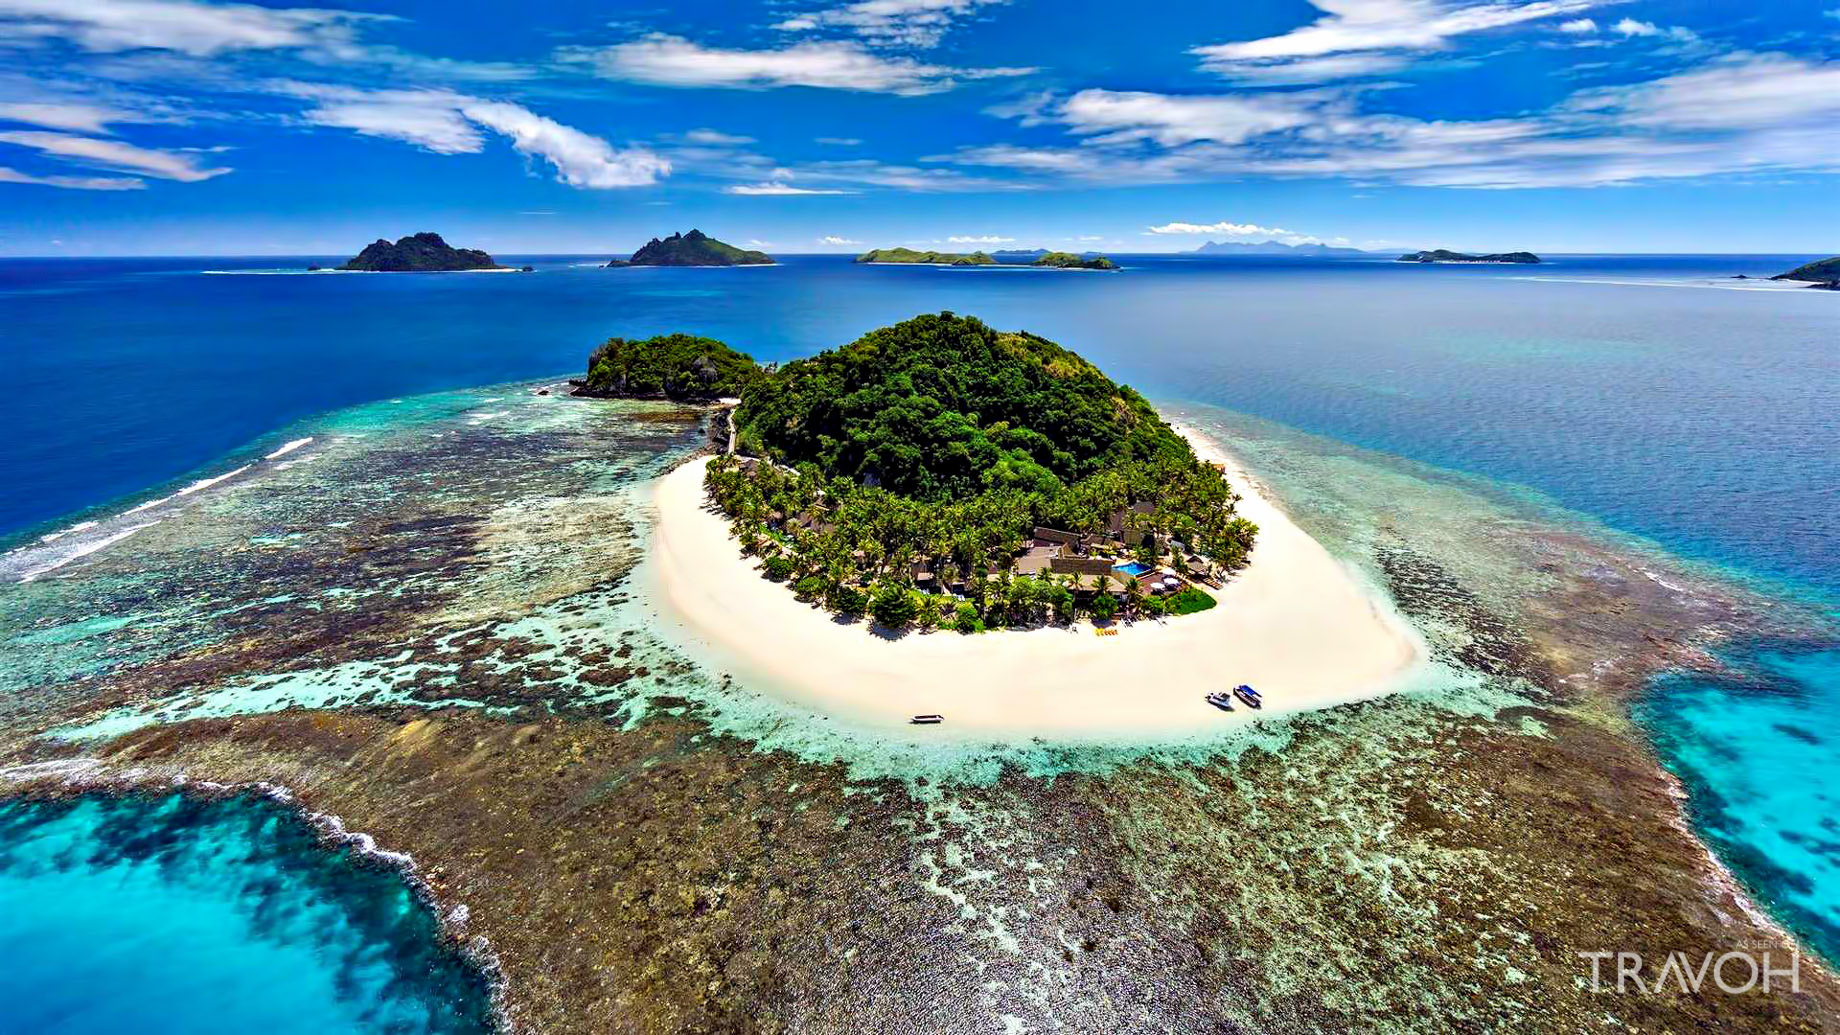 Matamanoa Island Resort – Exploring 10 of the Top Beach Locations on the Islands of Fiji